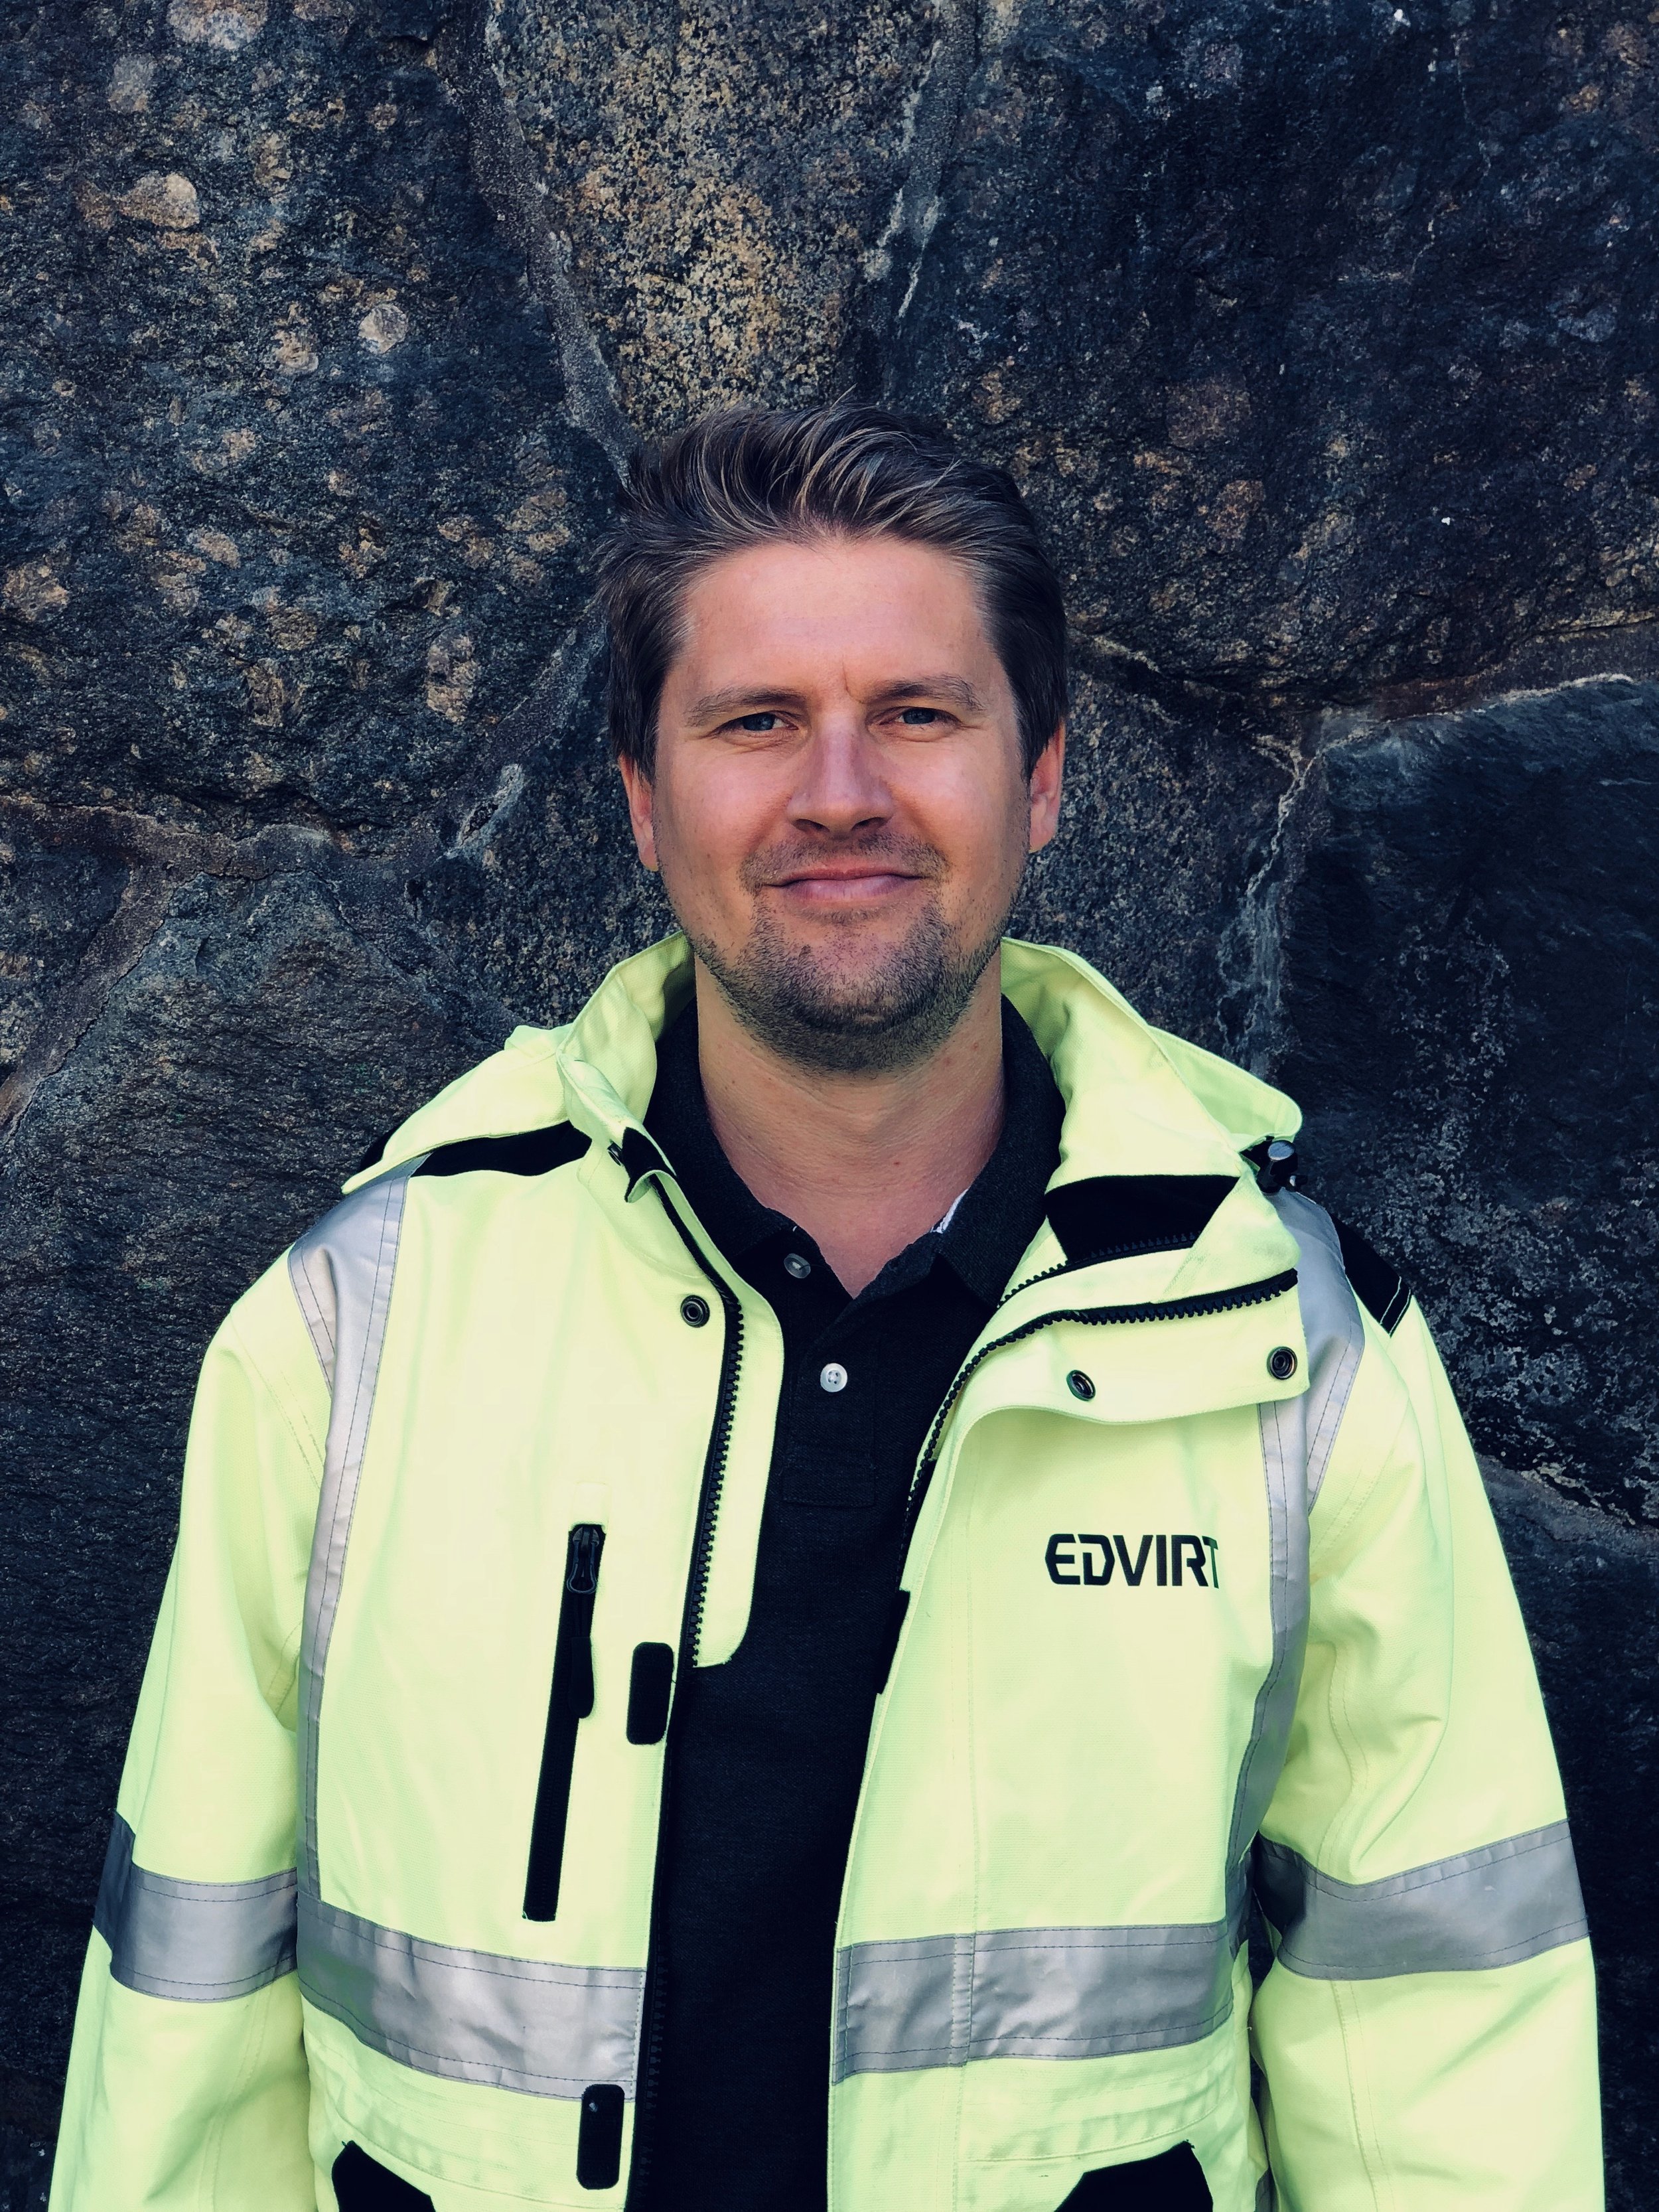 Eric Odkrans (Edvirt), Nozzle Operator Scheme Administration